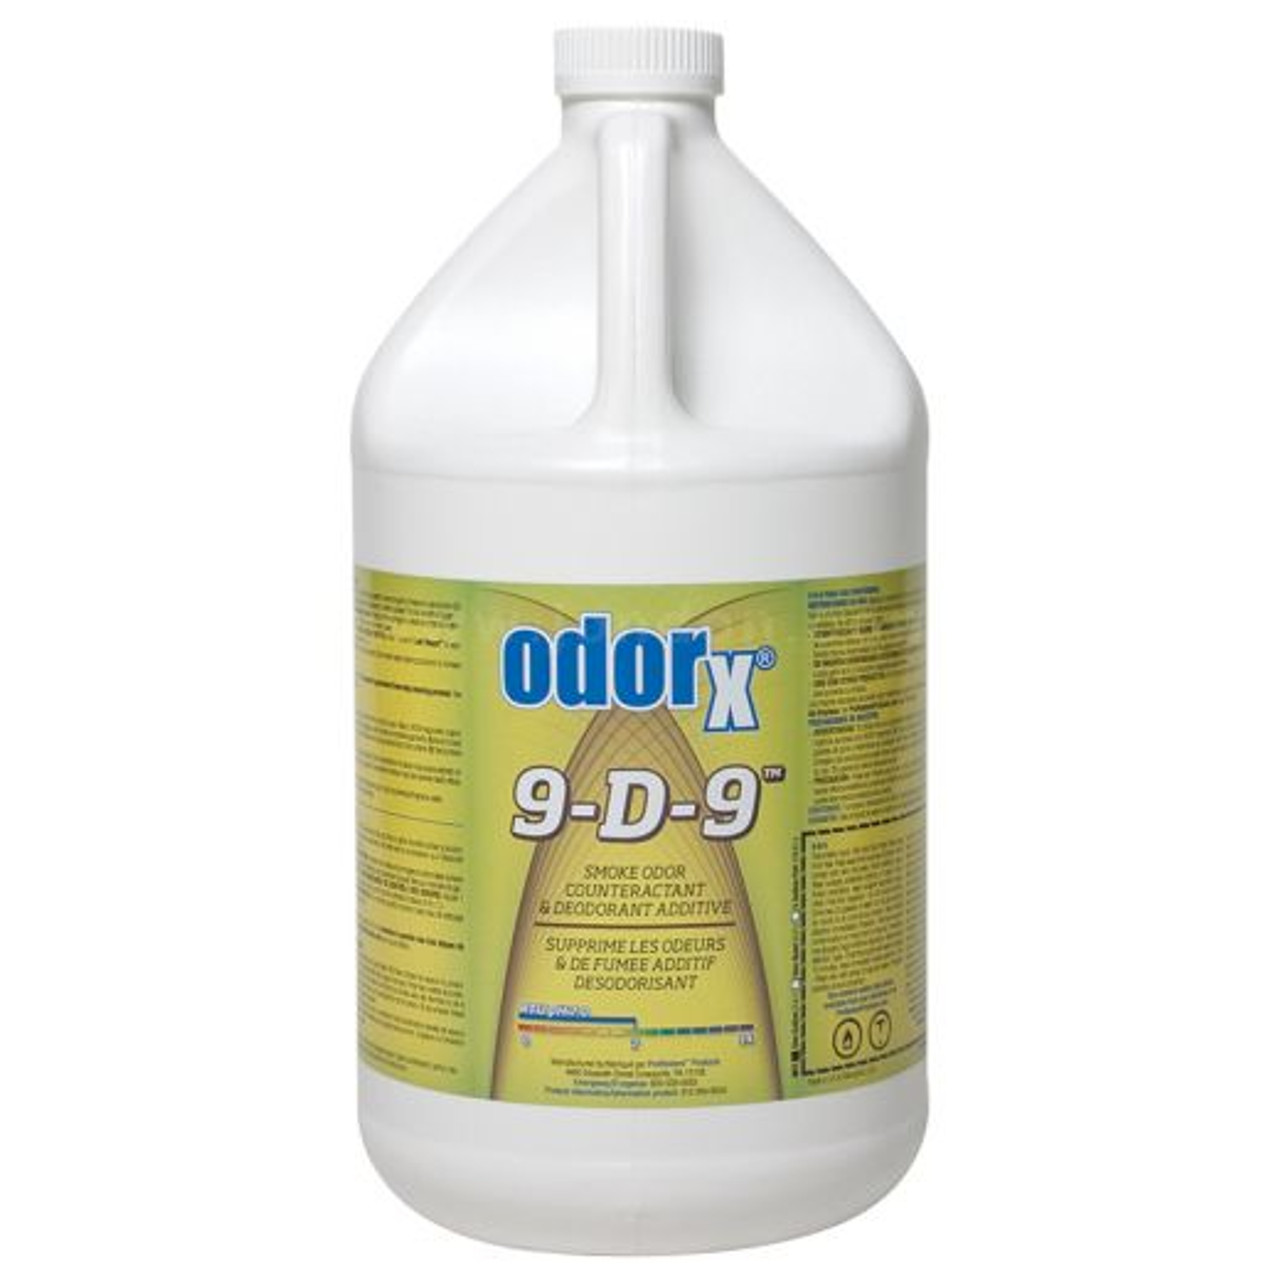 Odorx 9-D-9 CASE of 4 Gal.